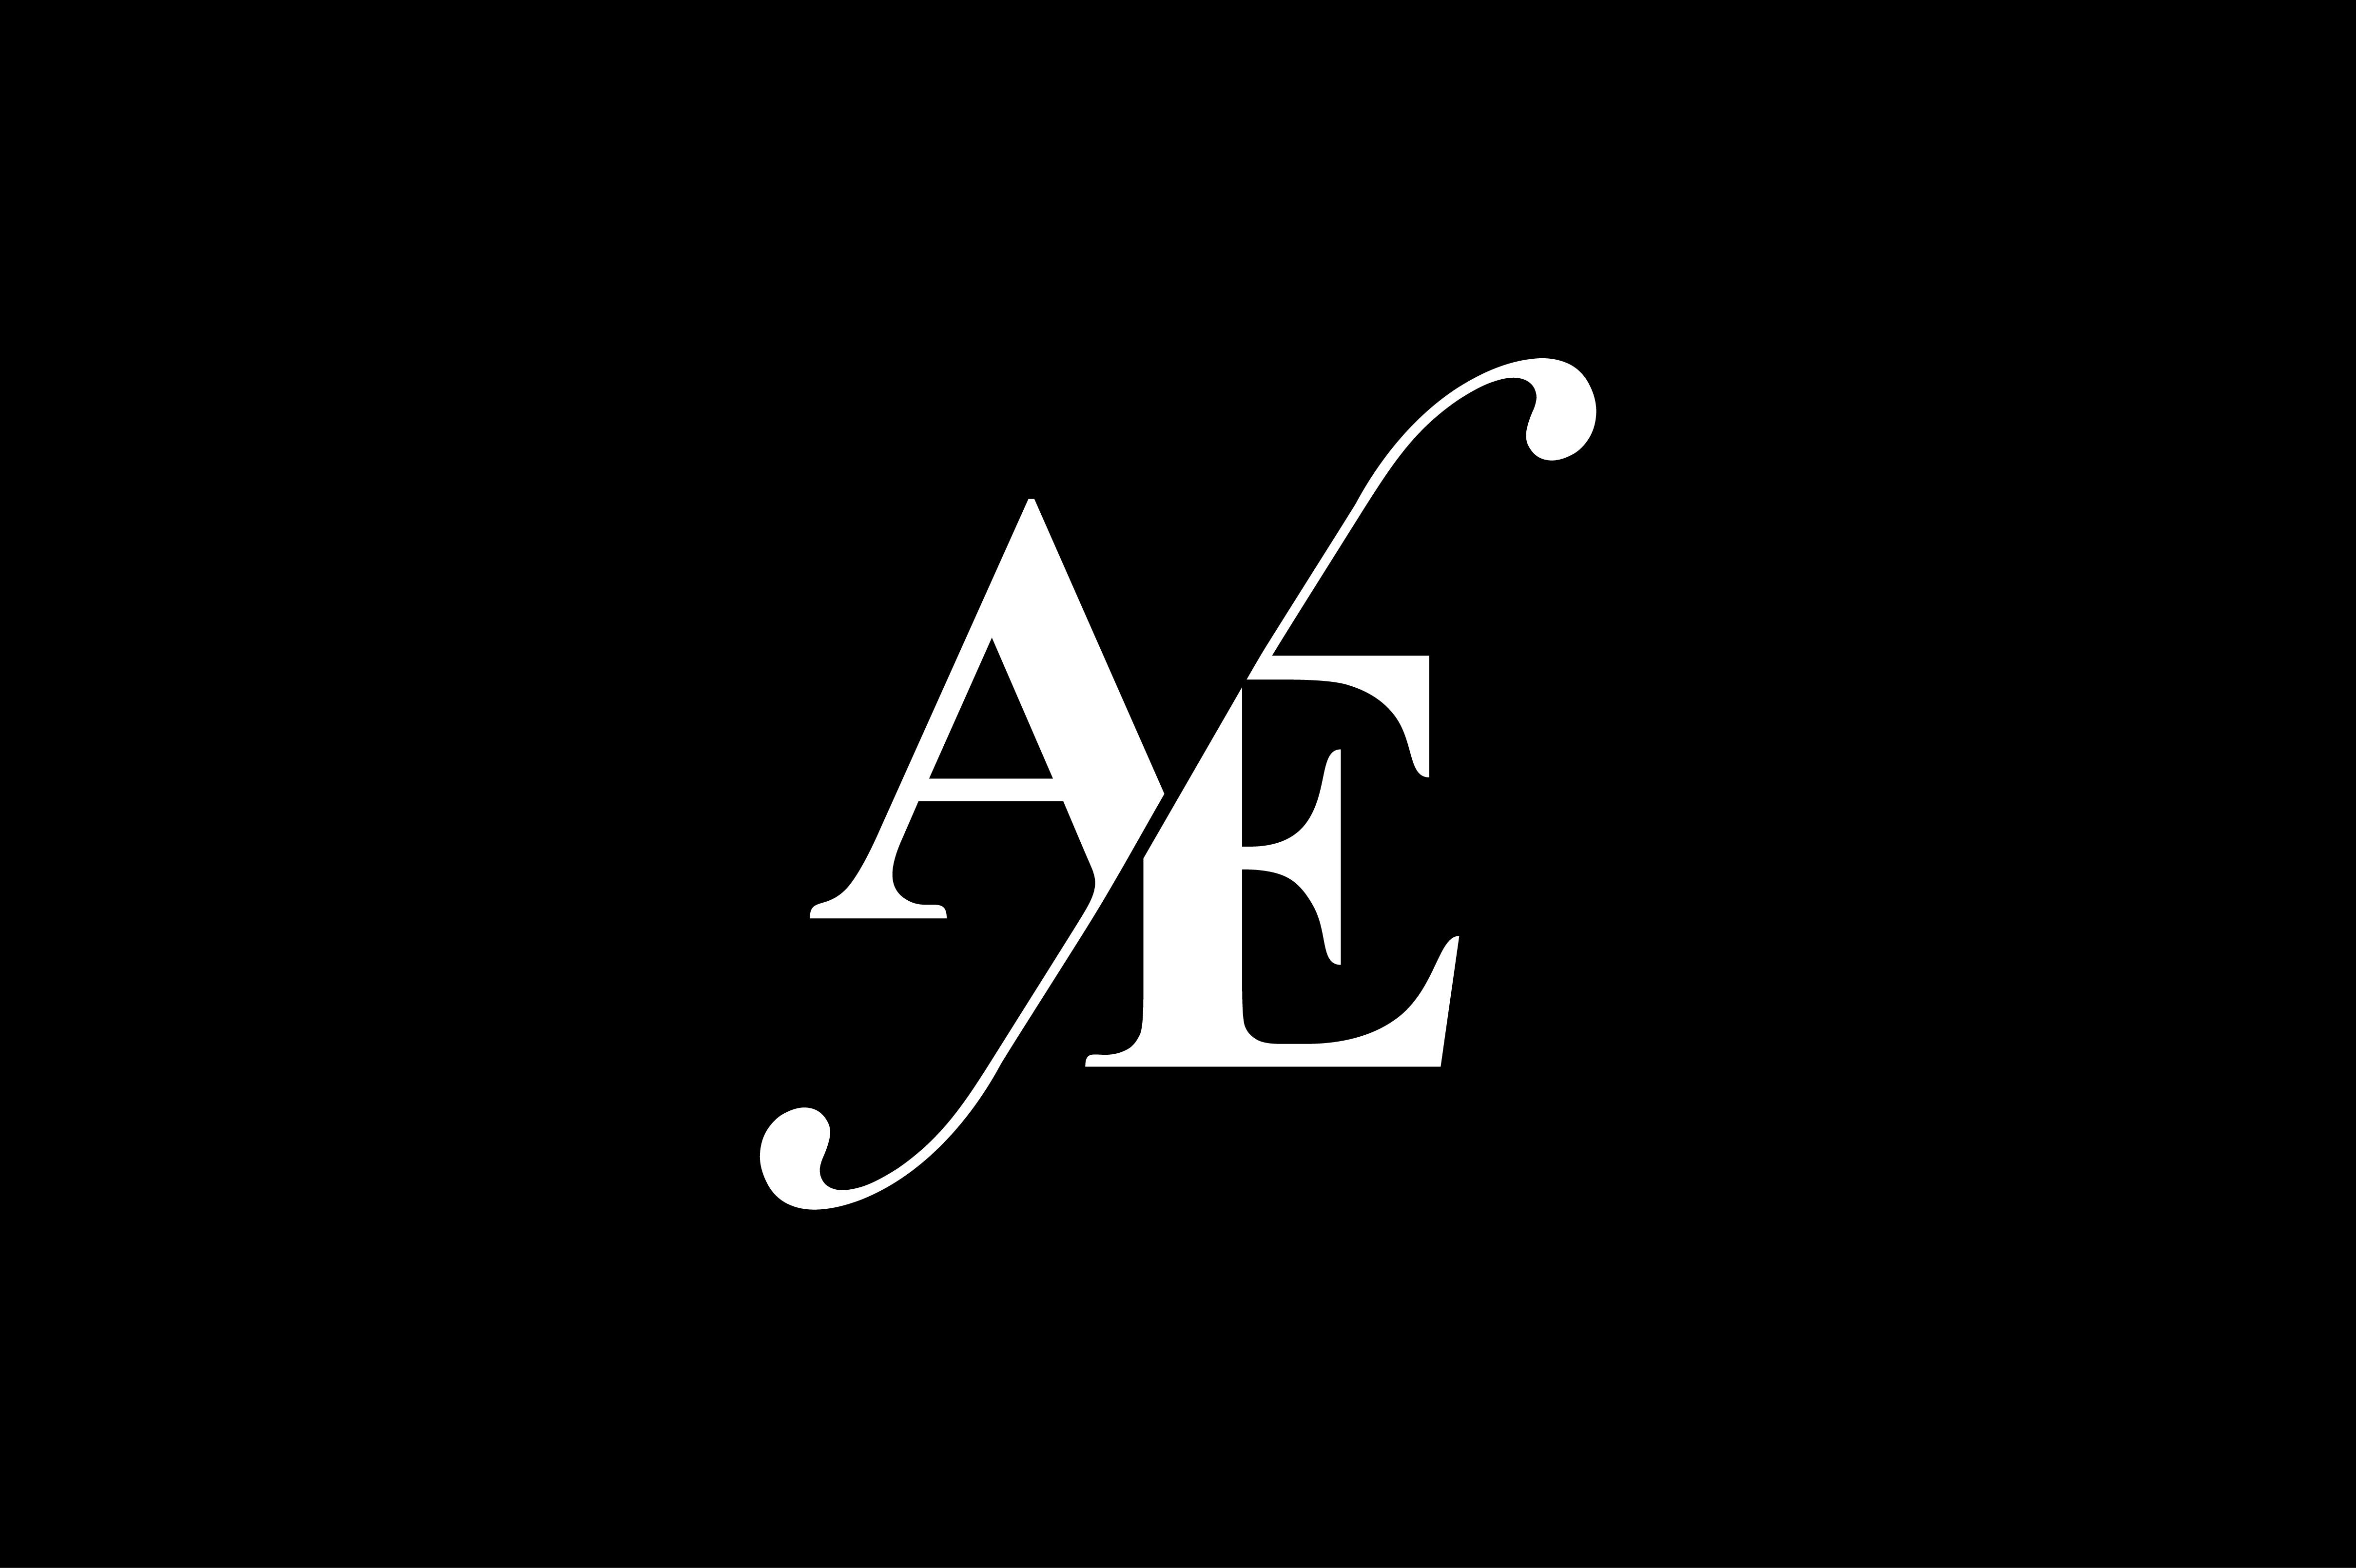 ae-monogram-logo-design-by-vectorseller-thehungryjpeg